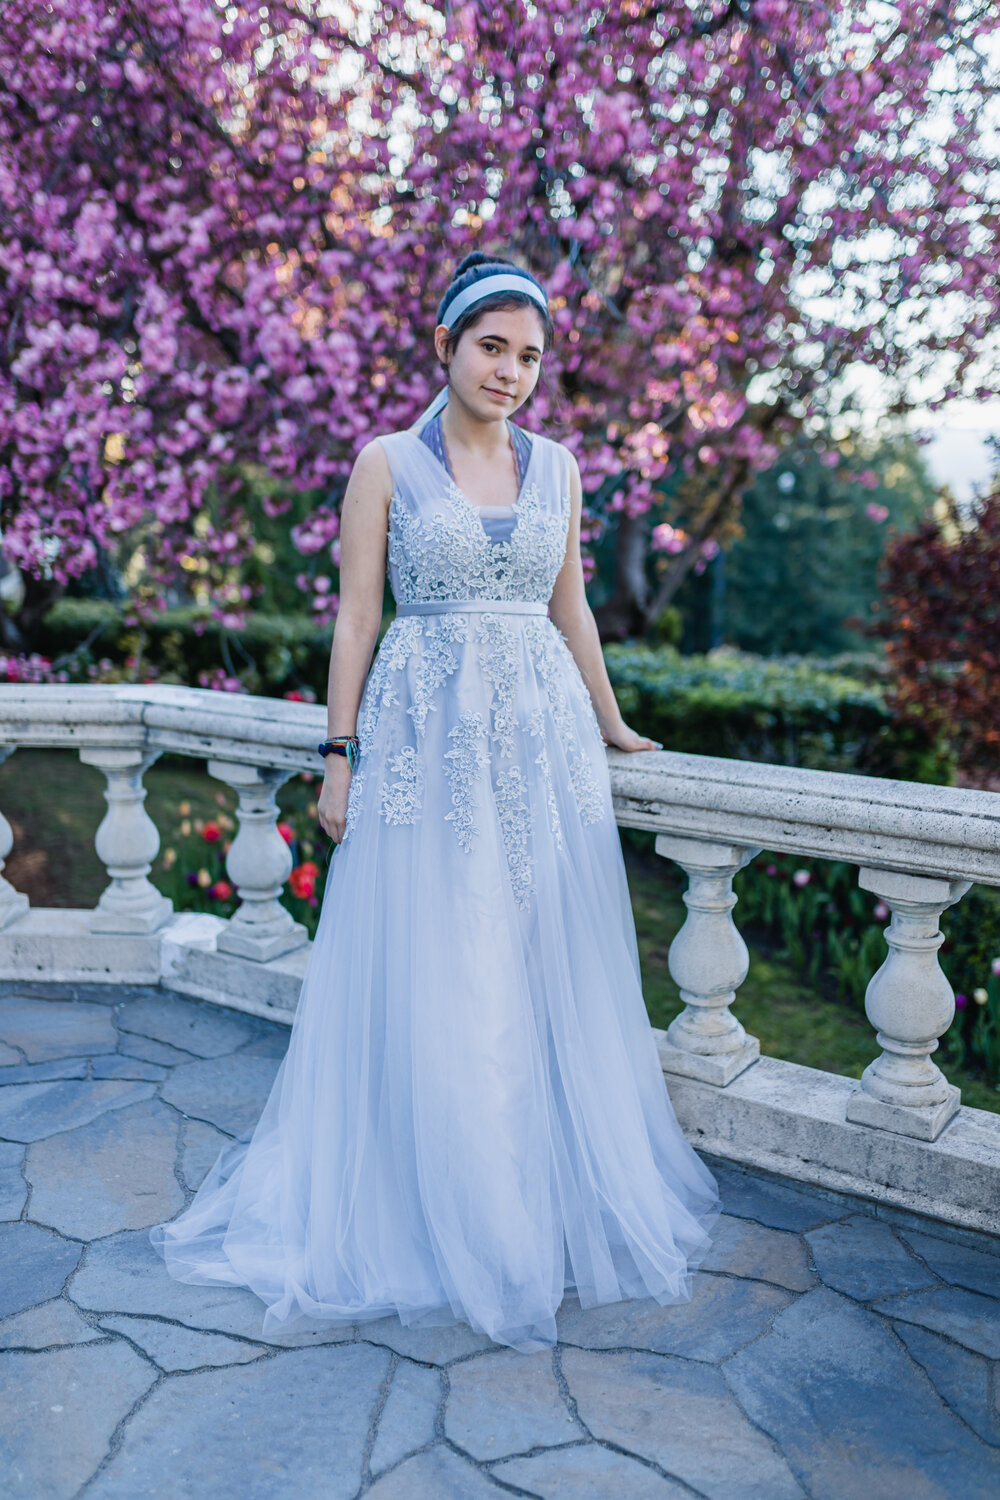 Cinderella by Anika Vodicka | Photo by Lenka Vodicka | Thrift Store Costumes